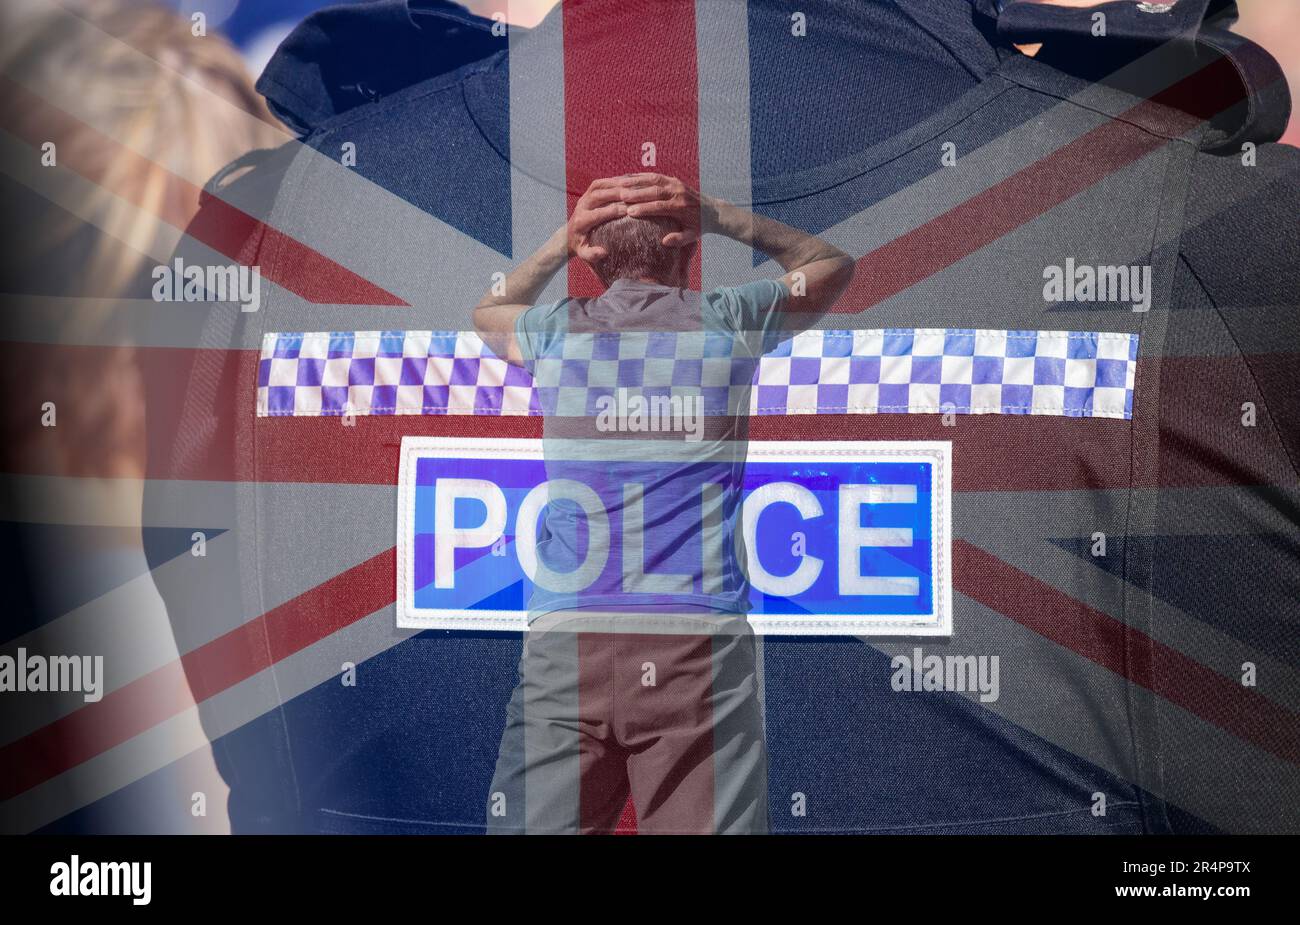 Police, Met Police, Mental health emergency response UK concept Stock Photo